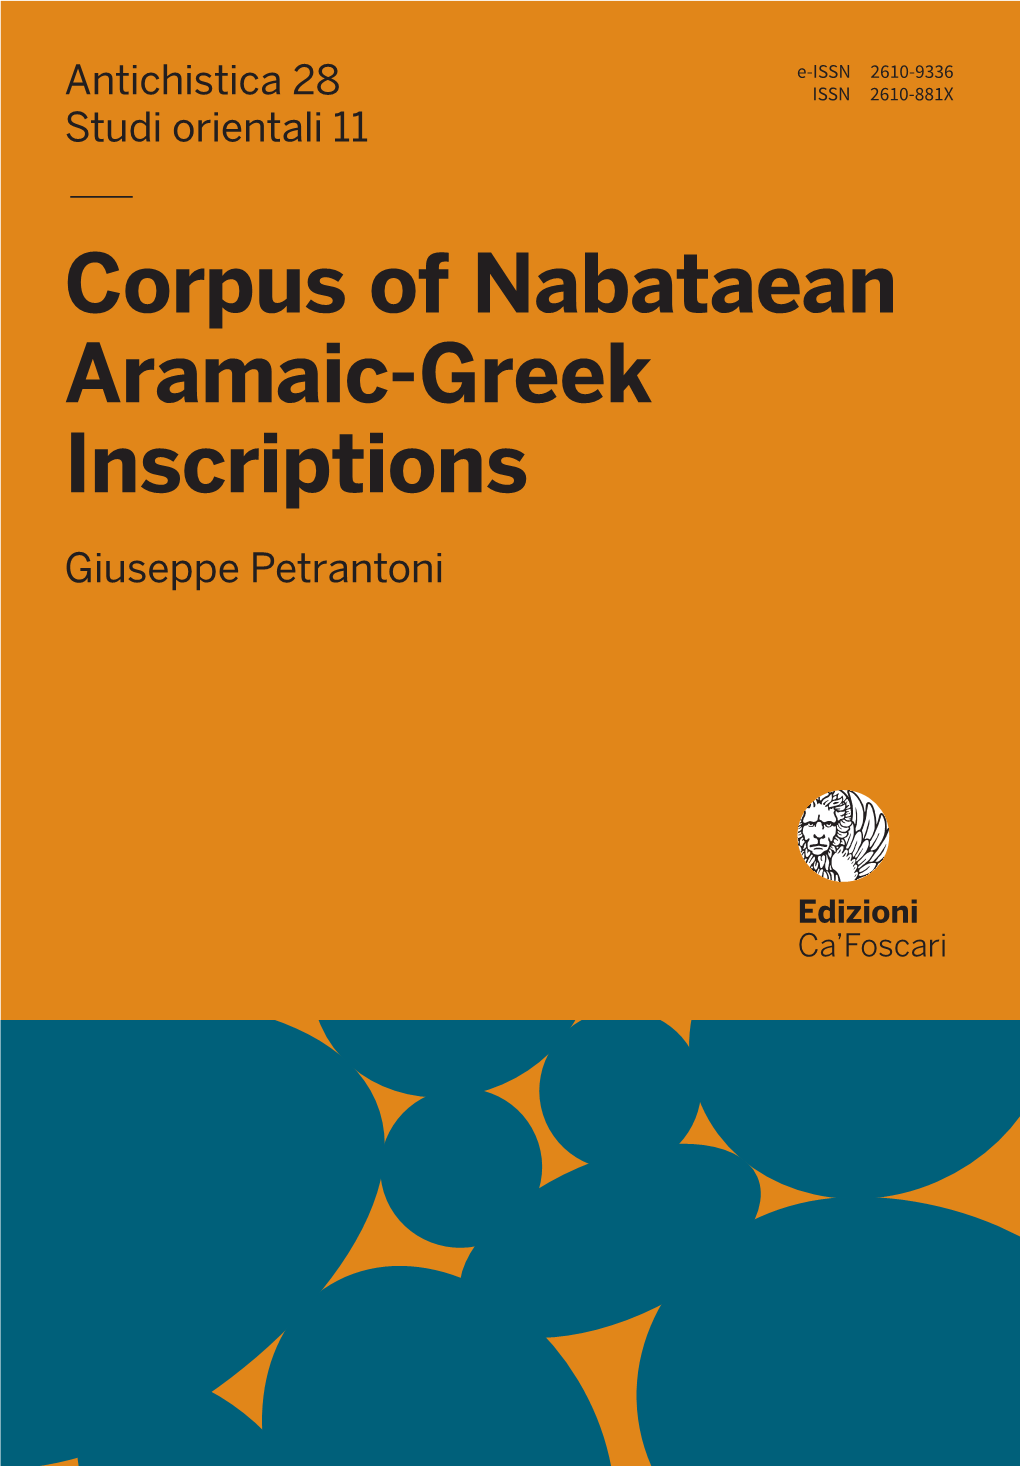 — Corpus of Nabataean Aramaic-Greek Inscriptions